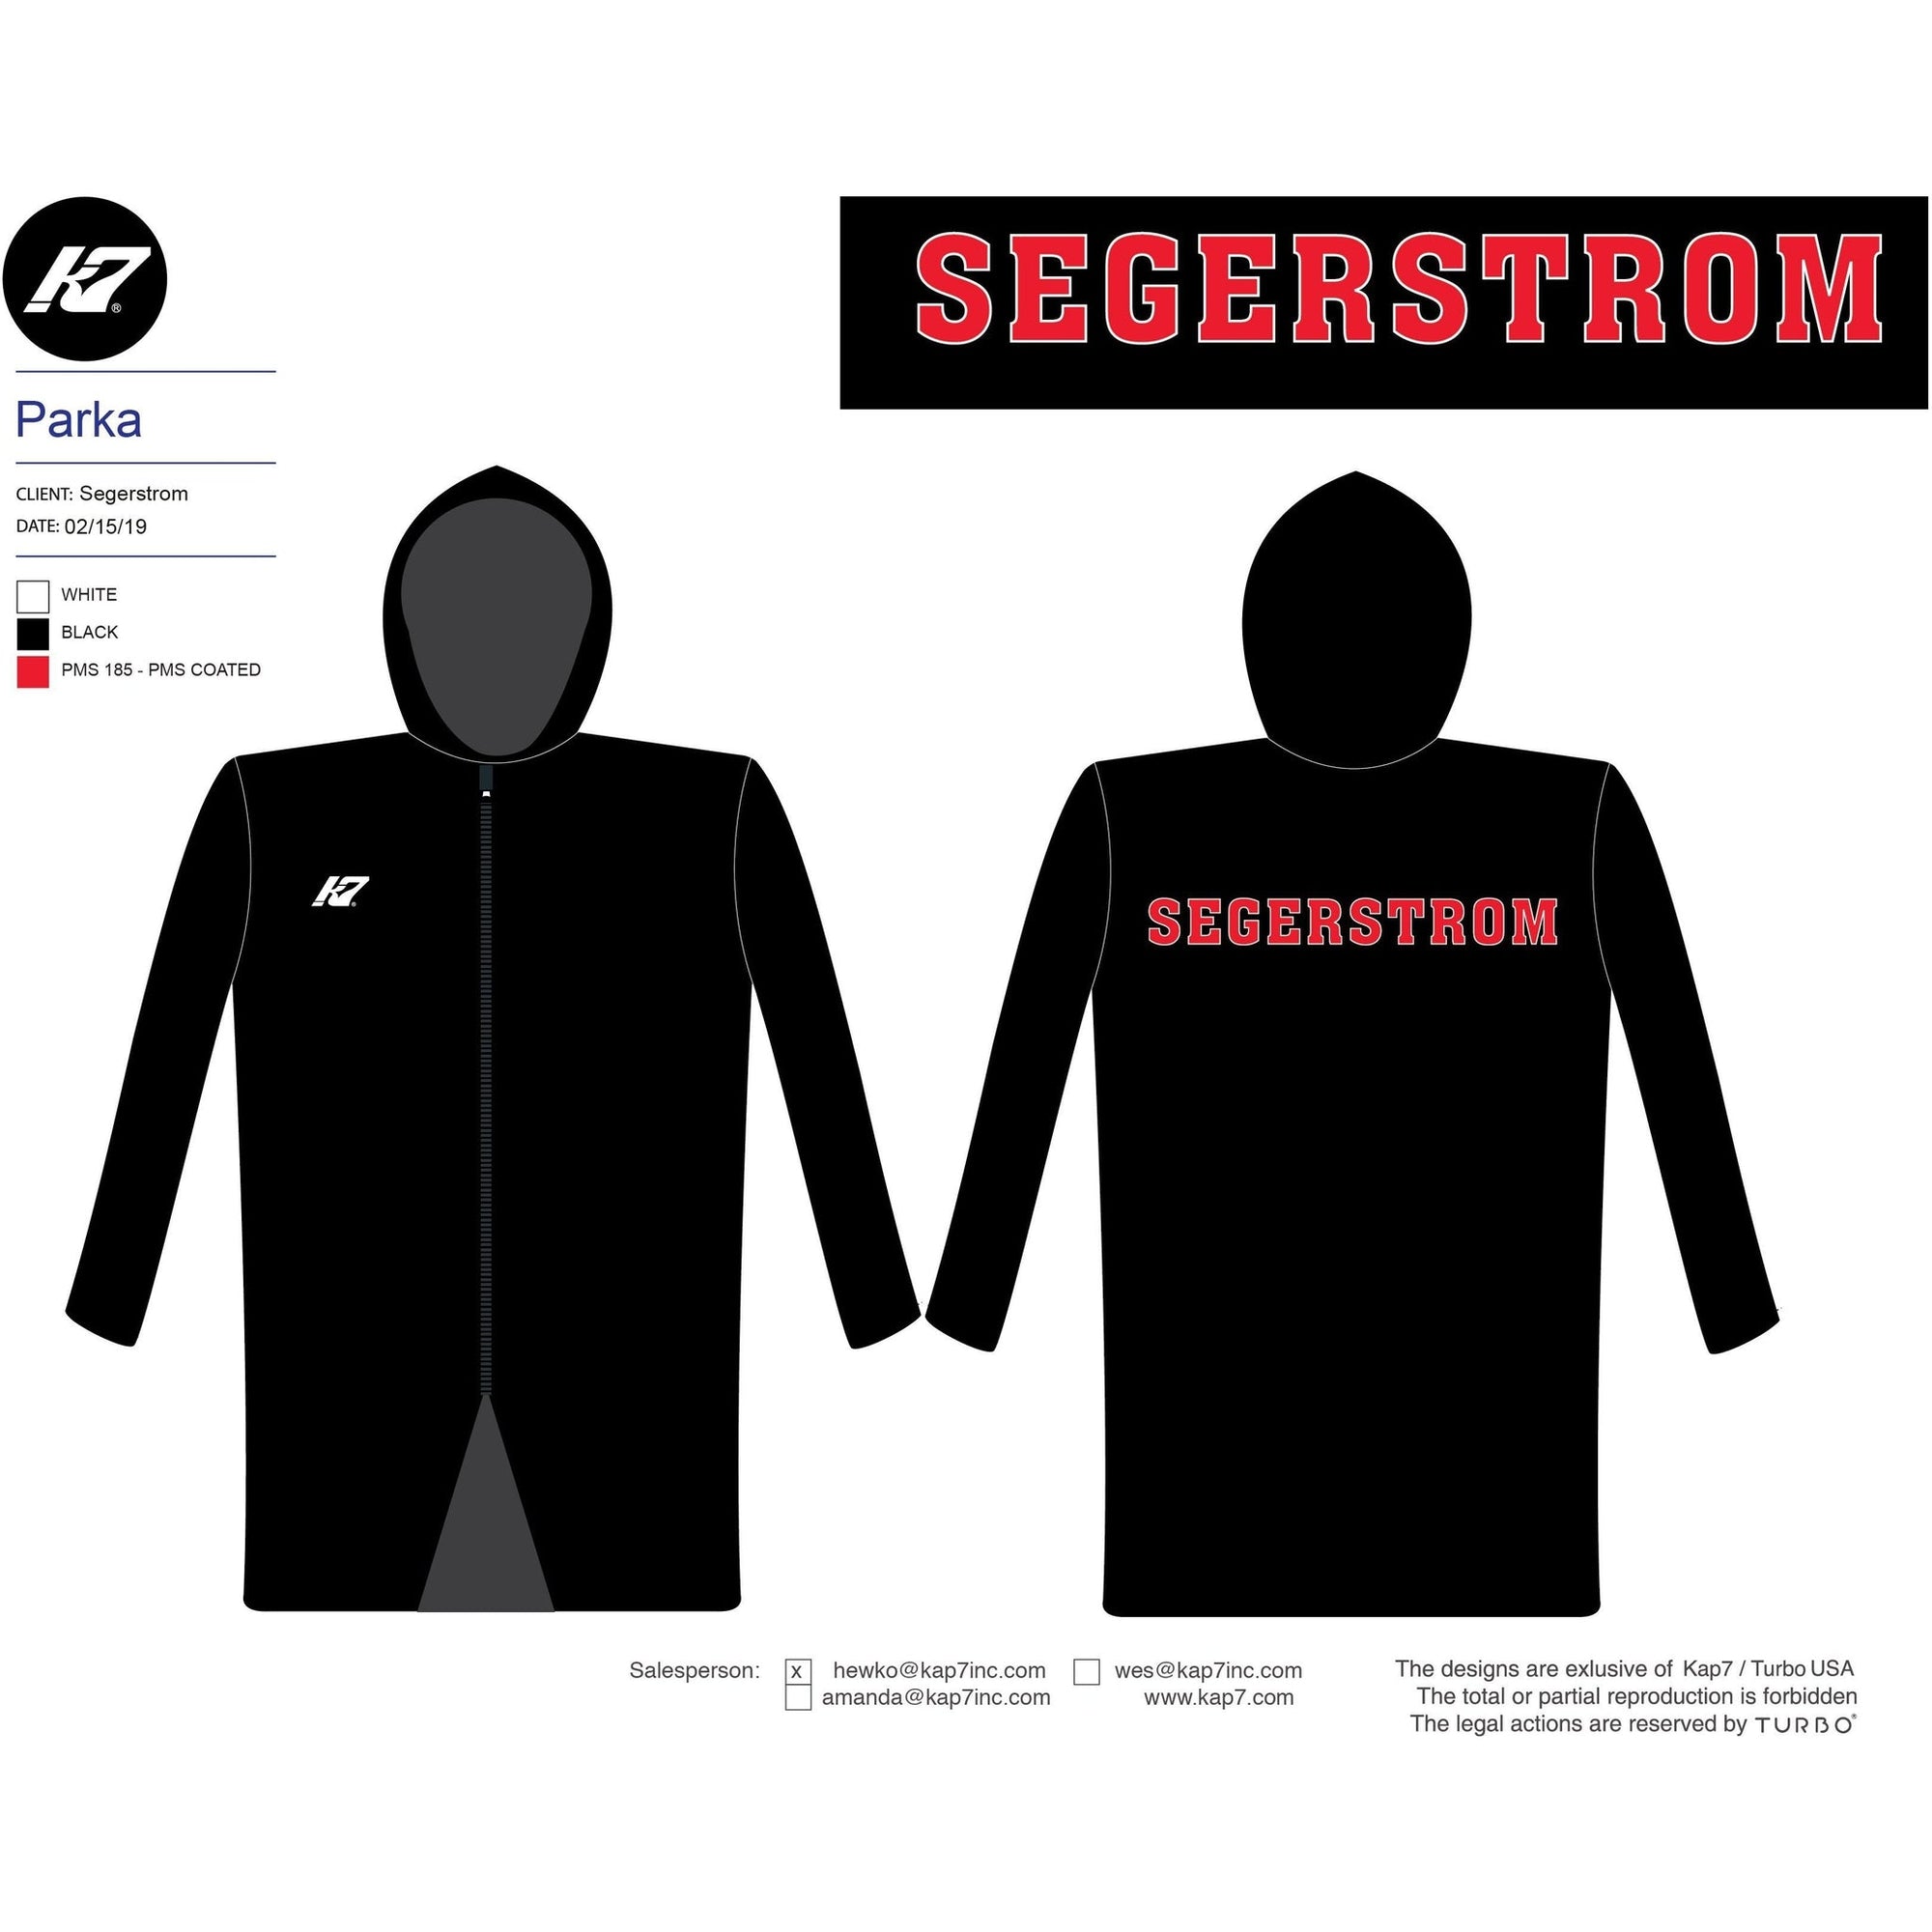 Segerstrom HS Team Store - Aquatics Parka - NO Last Name KAP7 International 